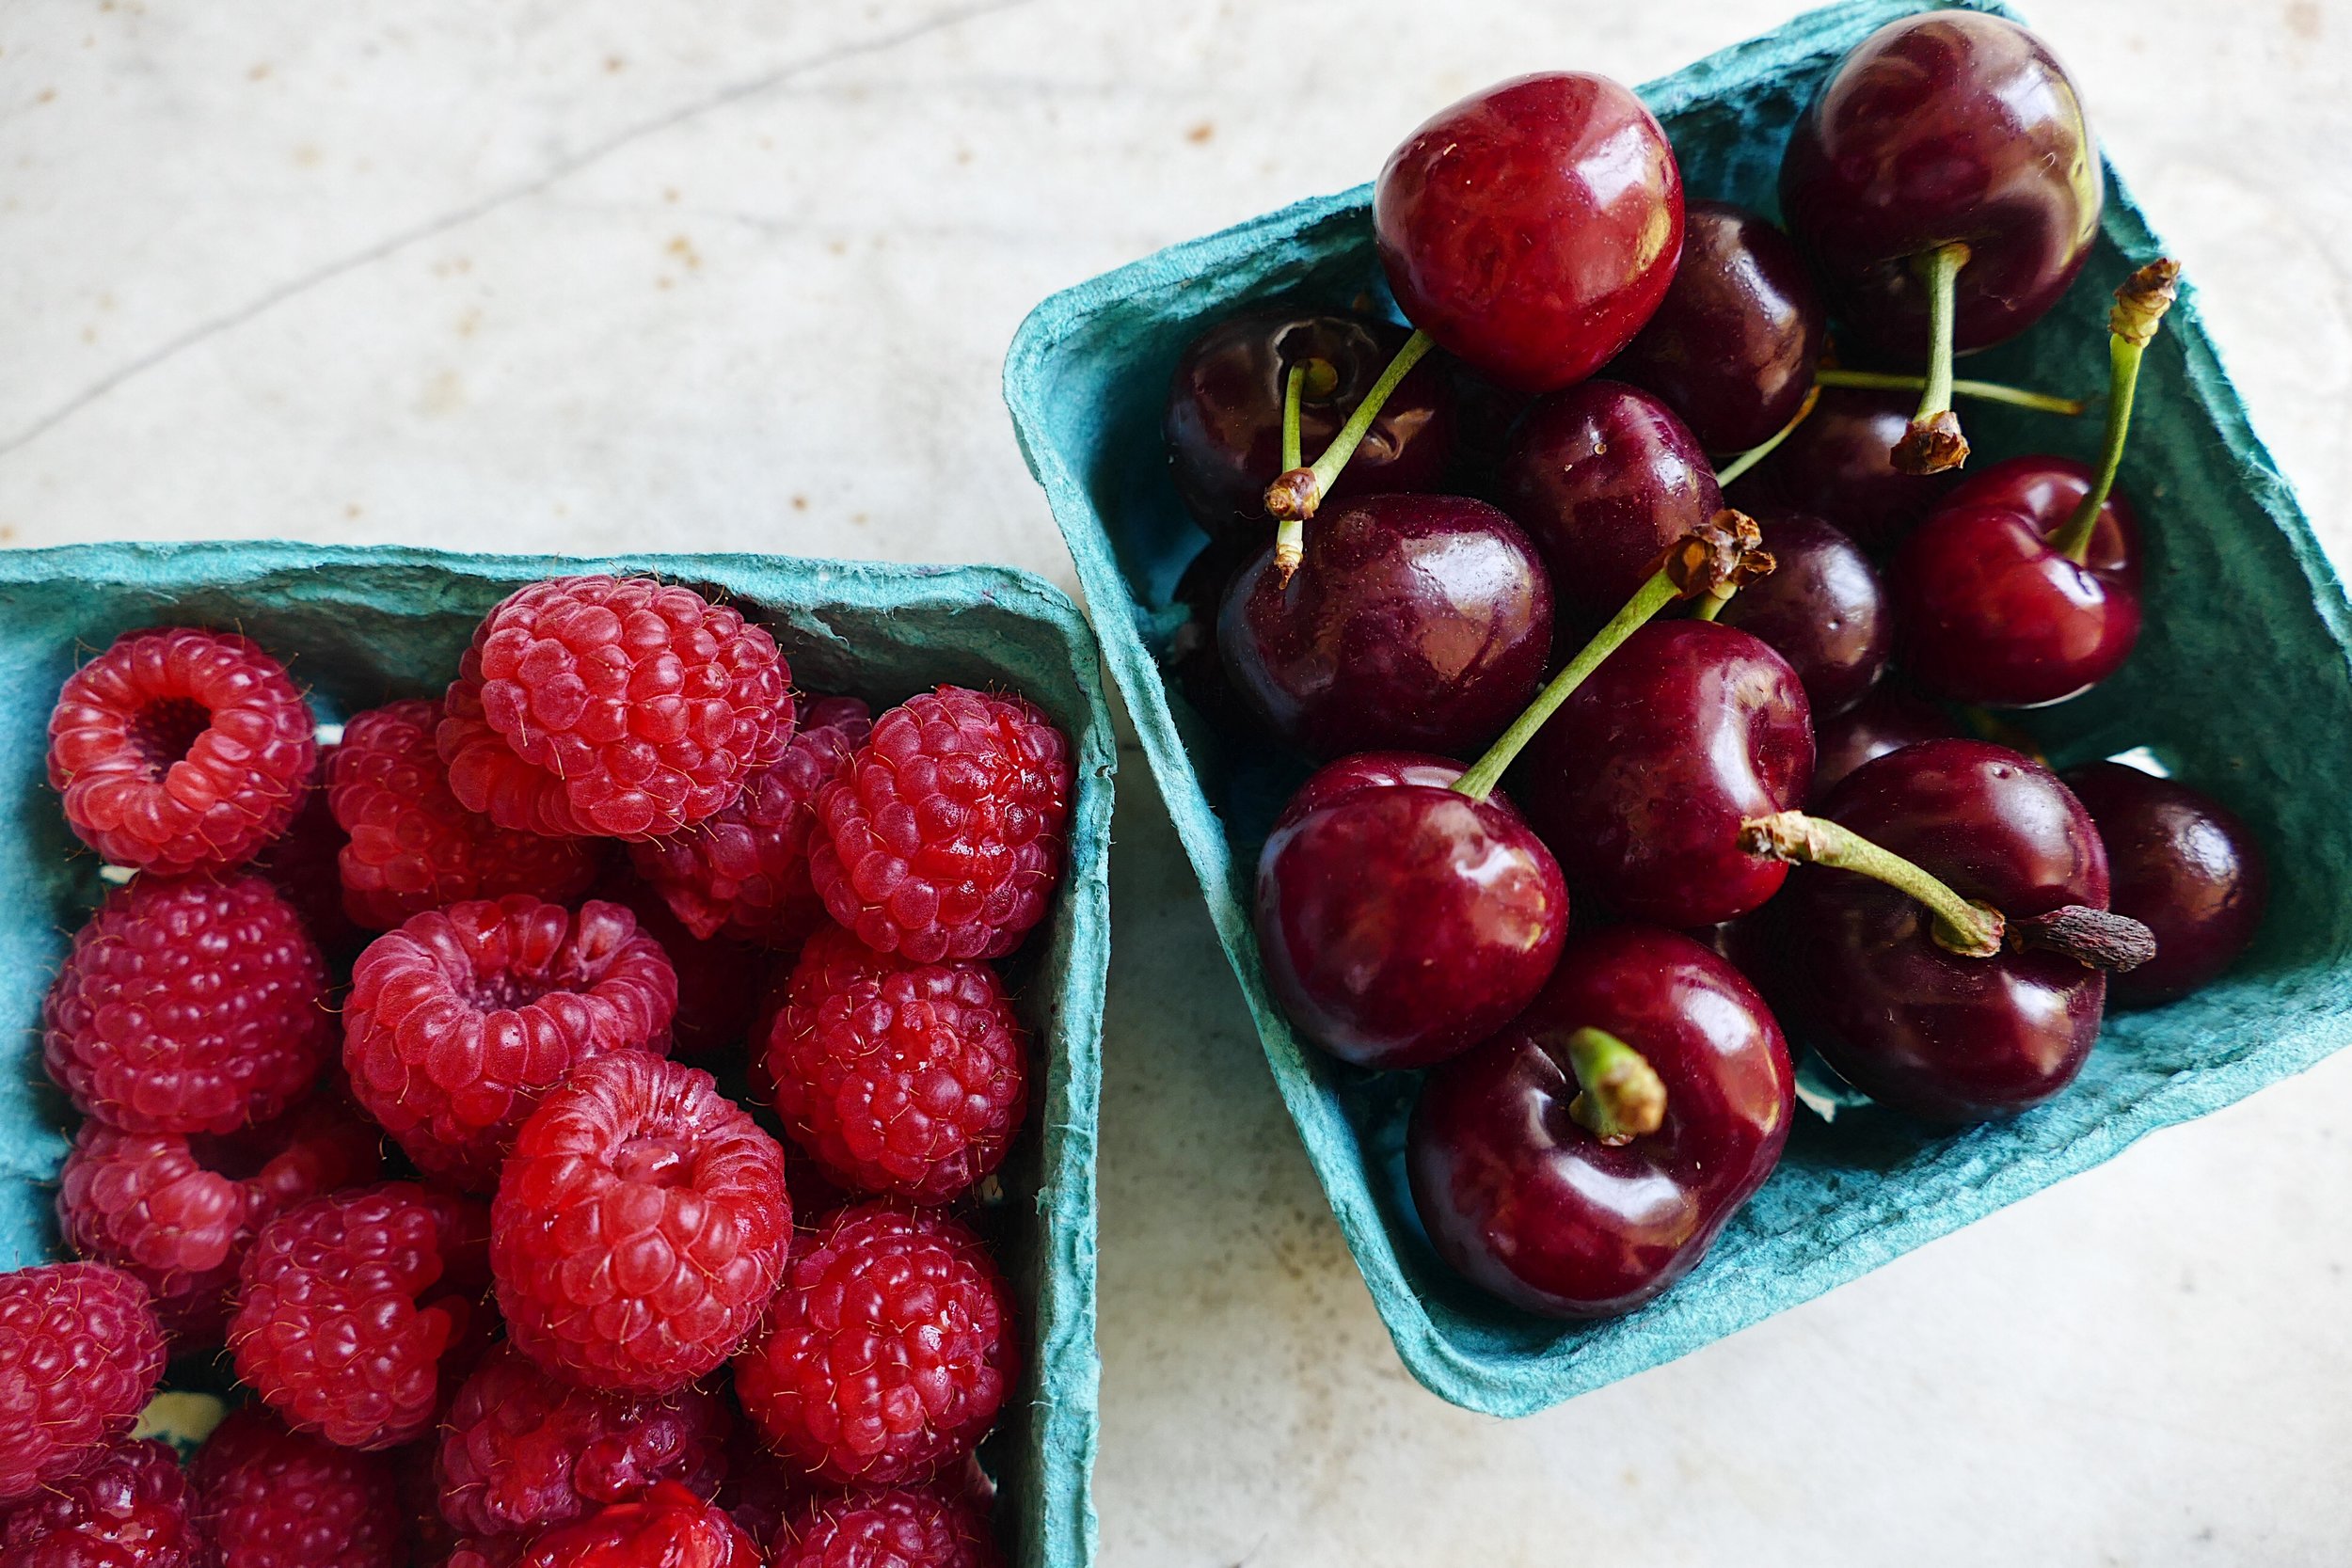 Baskets of Raspberries and Cherries